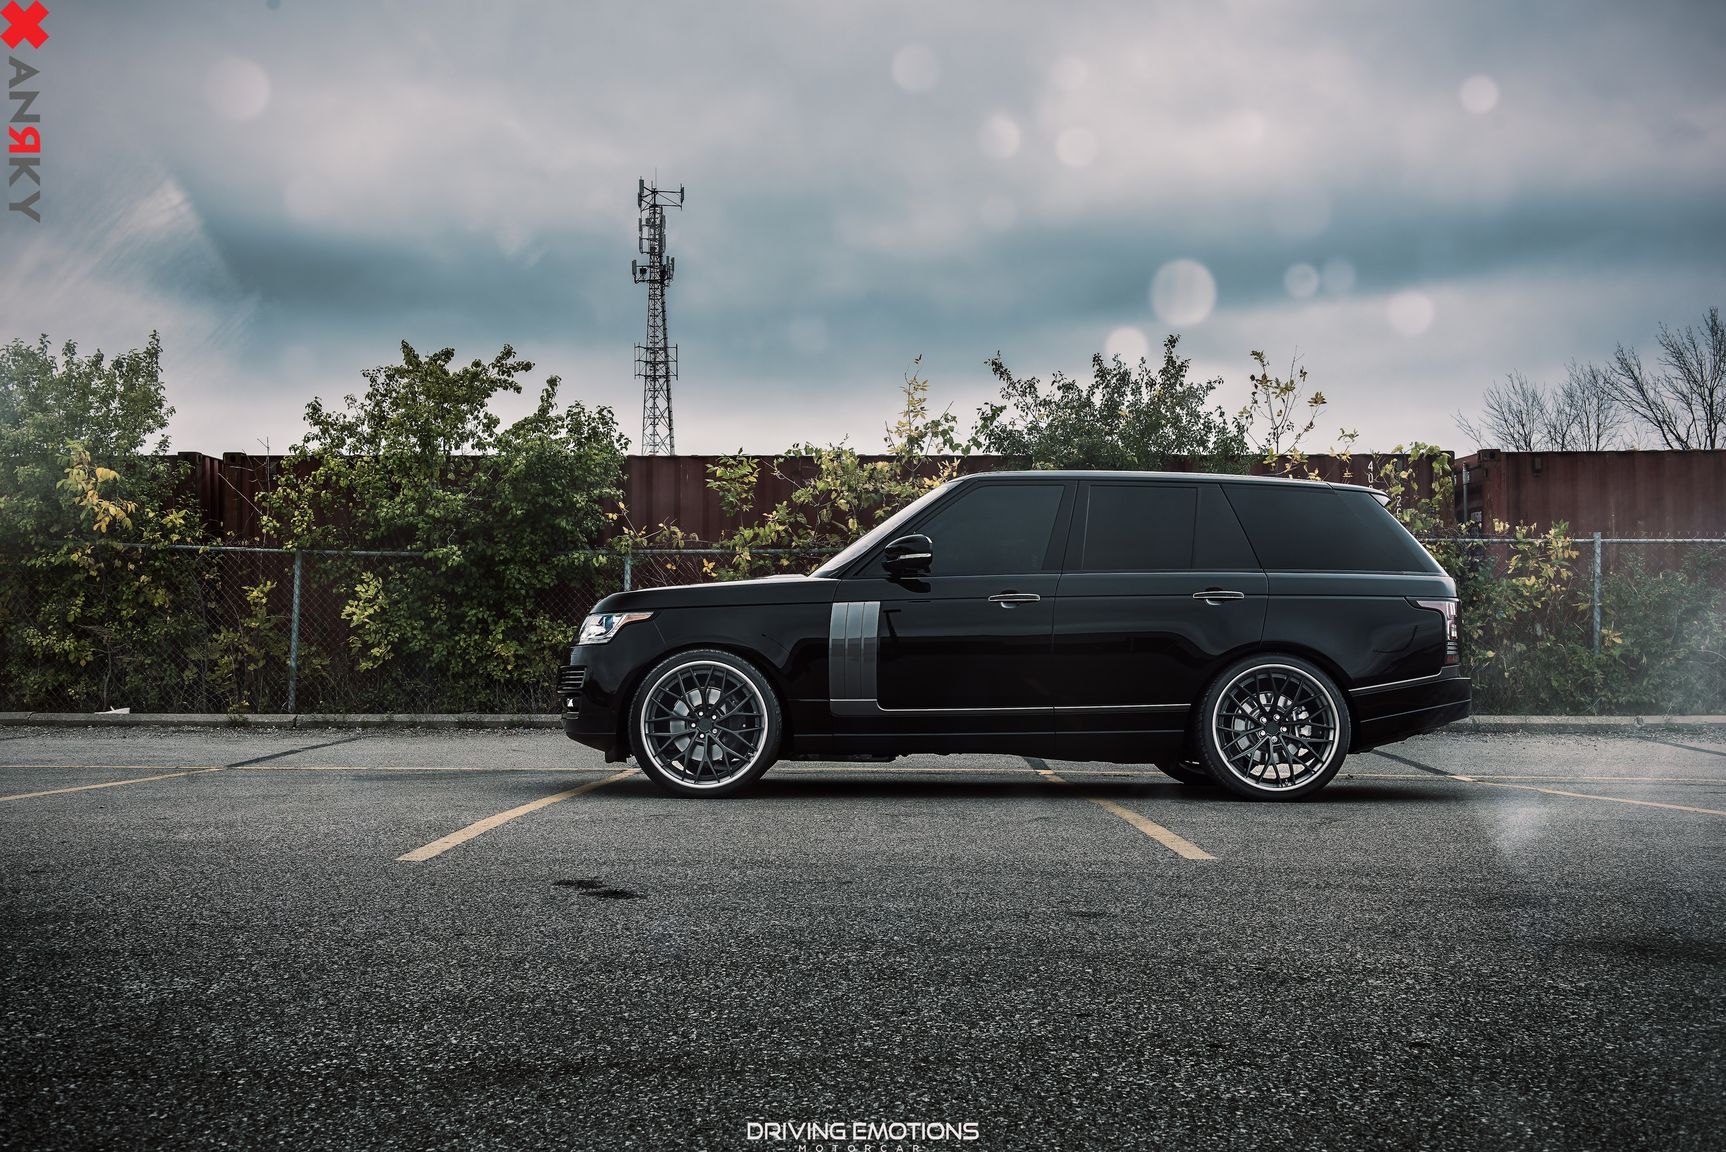 Custom Side Skirts on Black Range Rover - Photo by Anrky Wheels